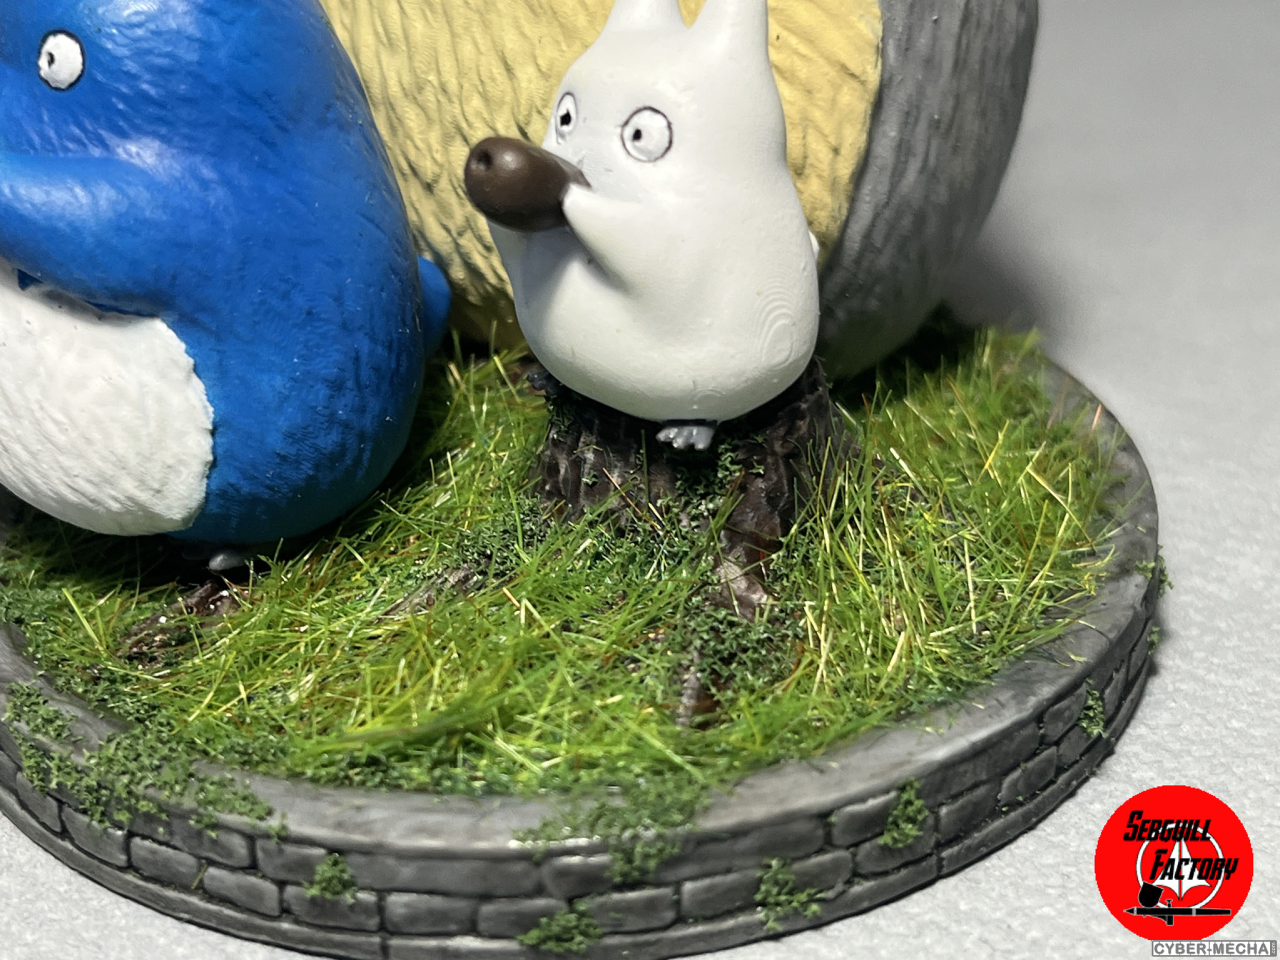 Print 3D : Totoro 1701076820